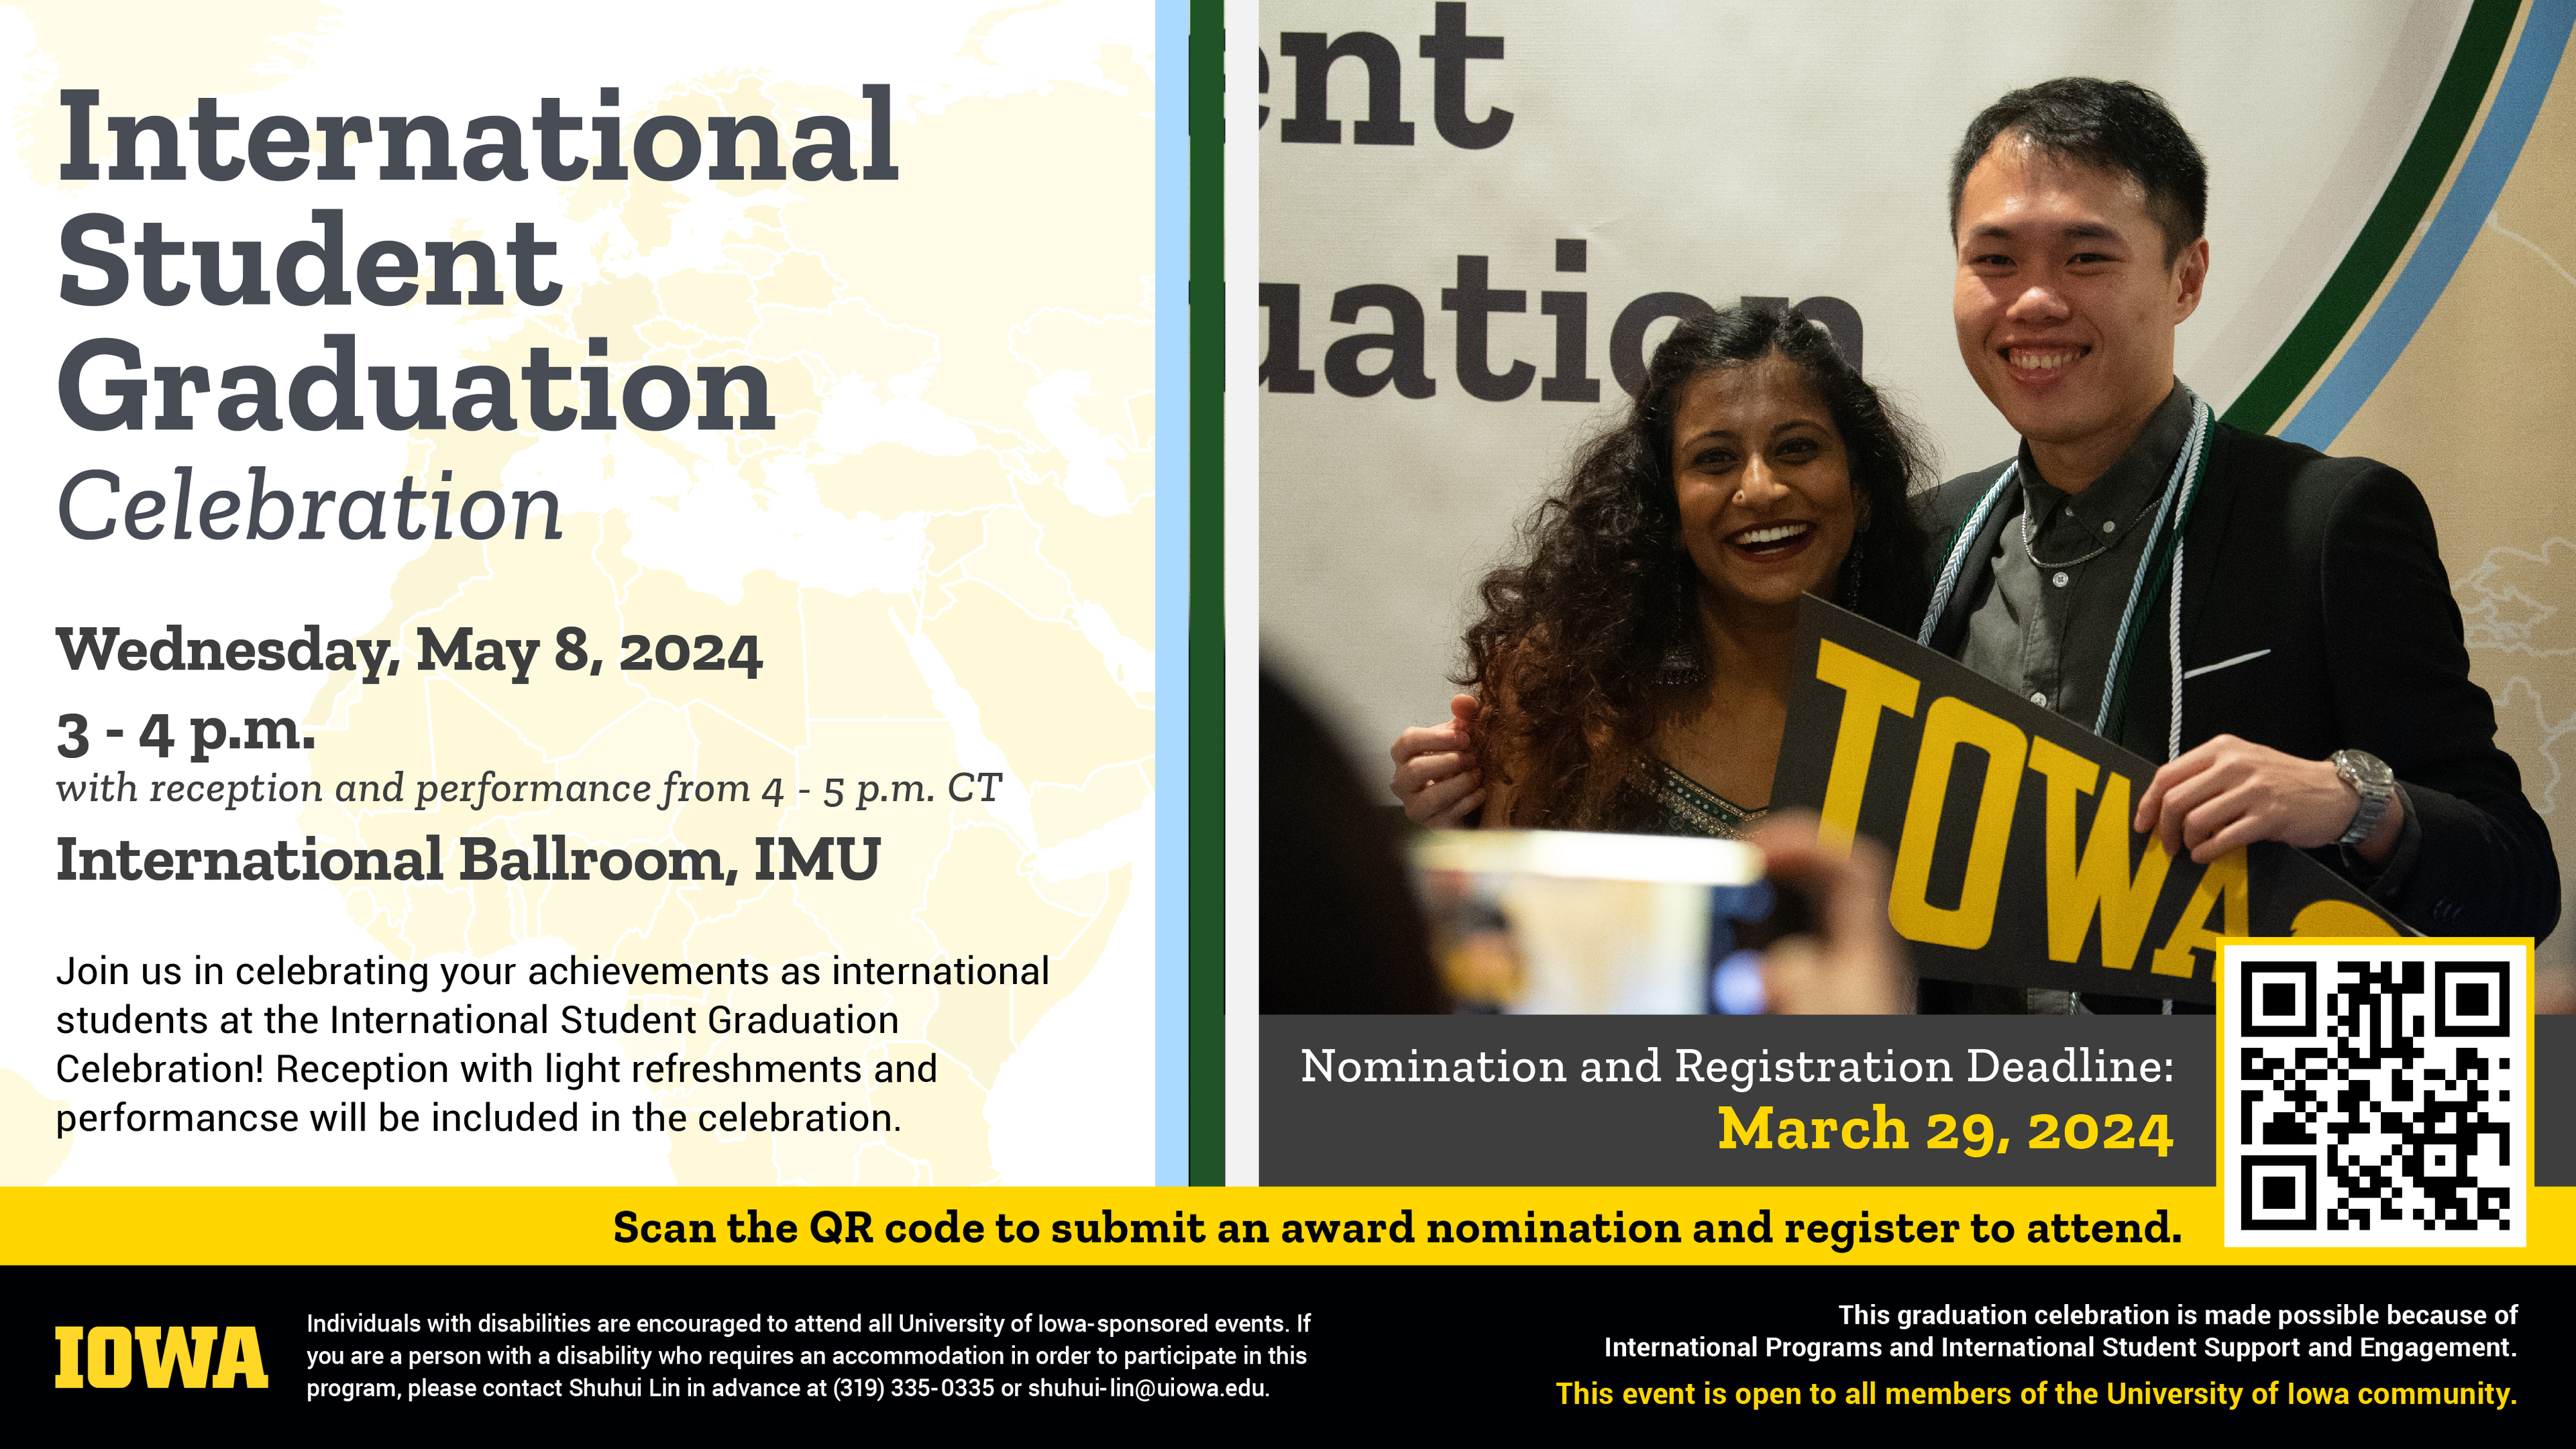 International Student Graduation Celebration Nomination and Registration Deadline: March 29